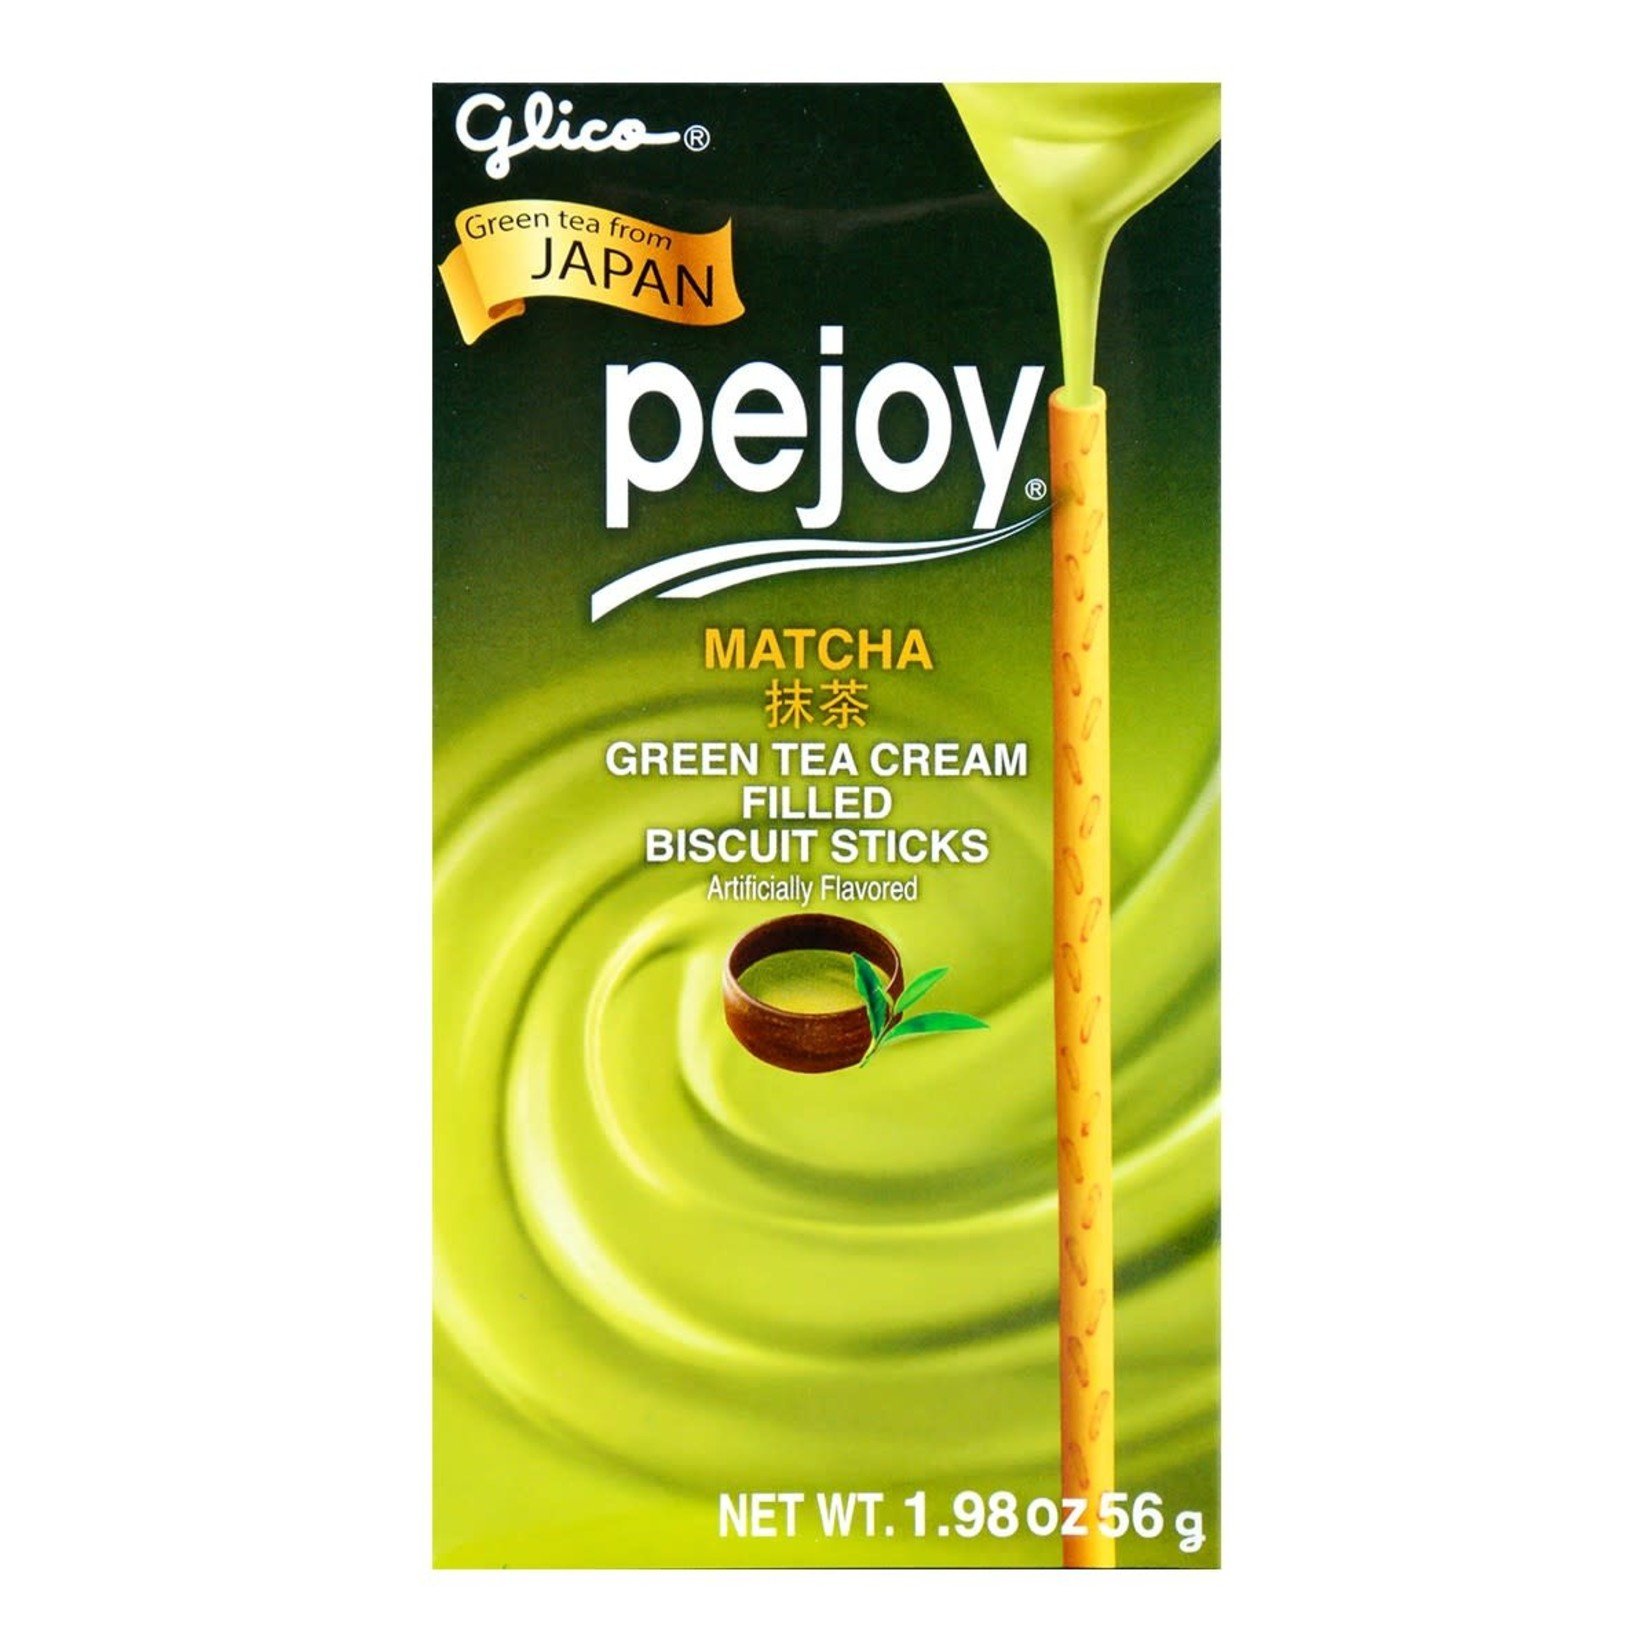 Glico Pejoy Matcha - 1.98oz